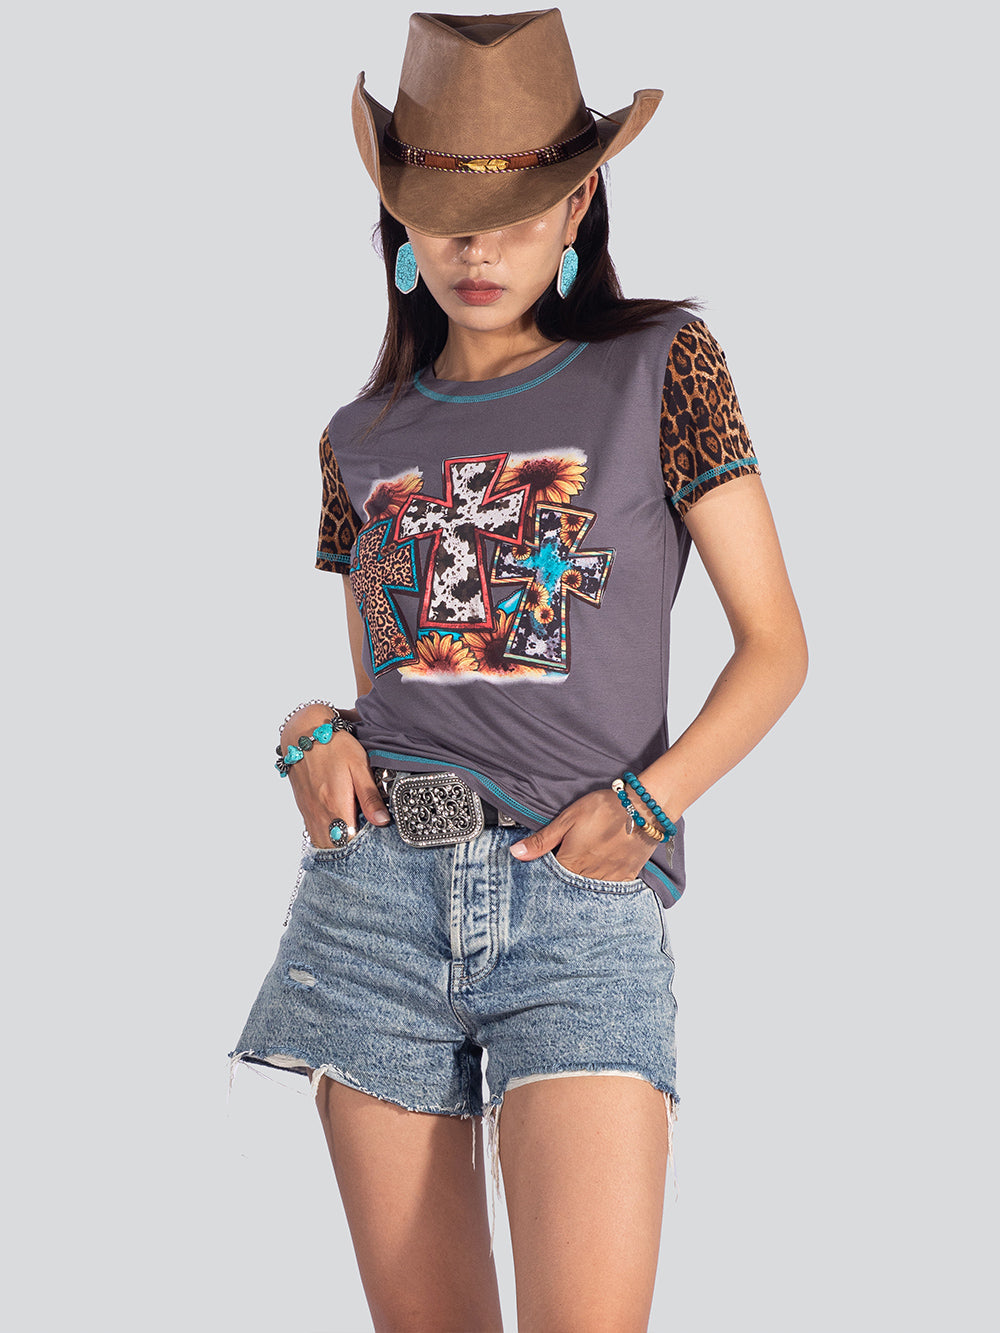 Women's Cross Leopard Print Short Sleeve Shirt - Cowgirl Wear